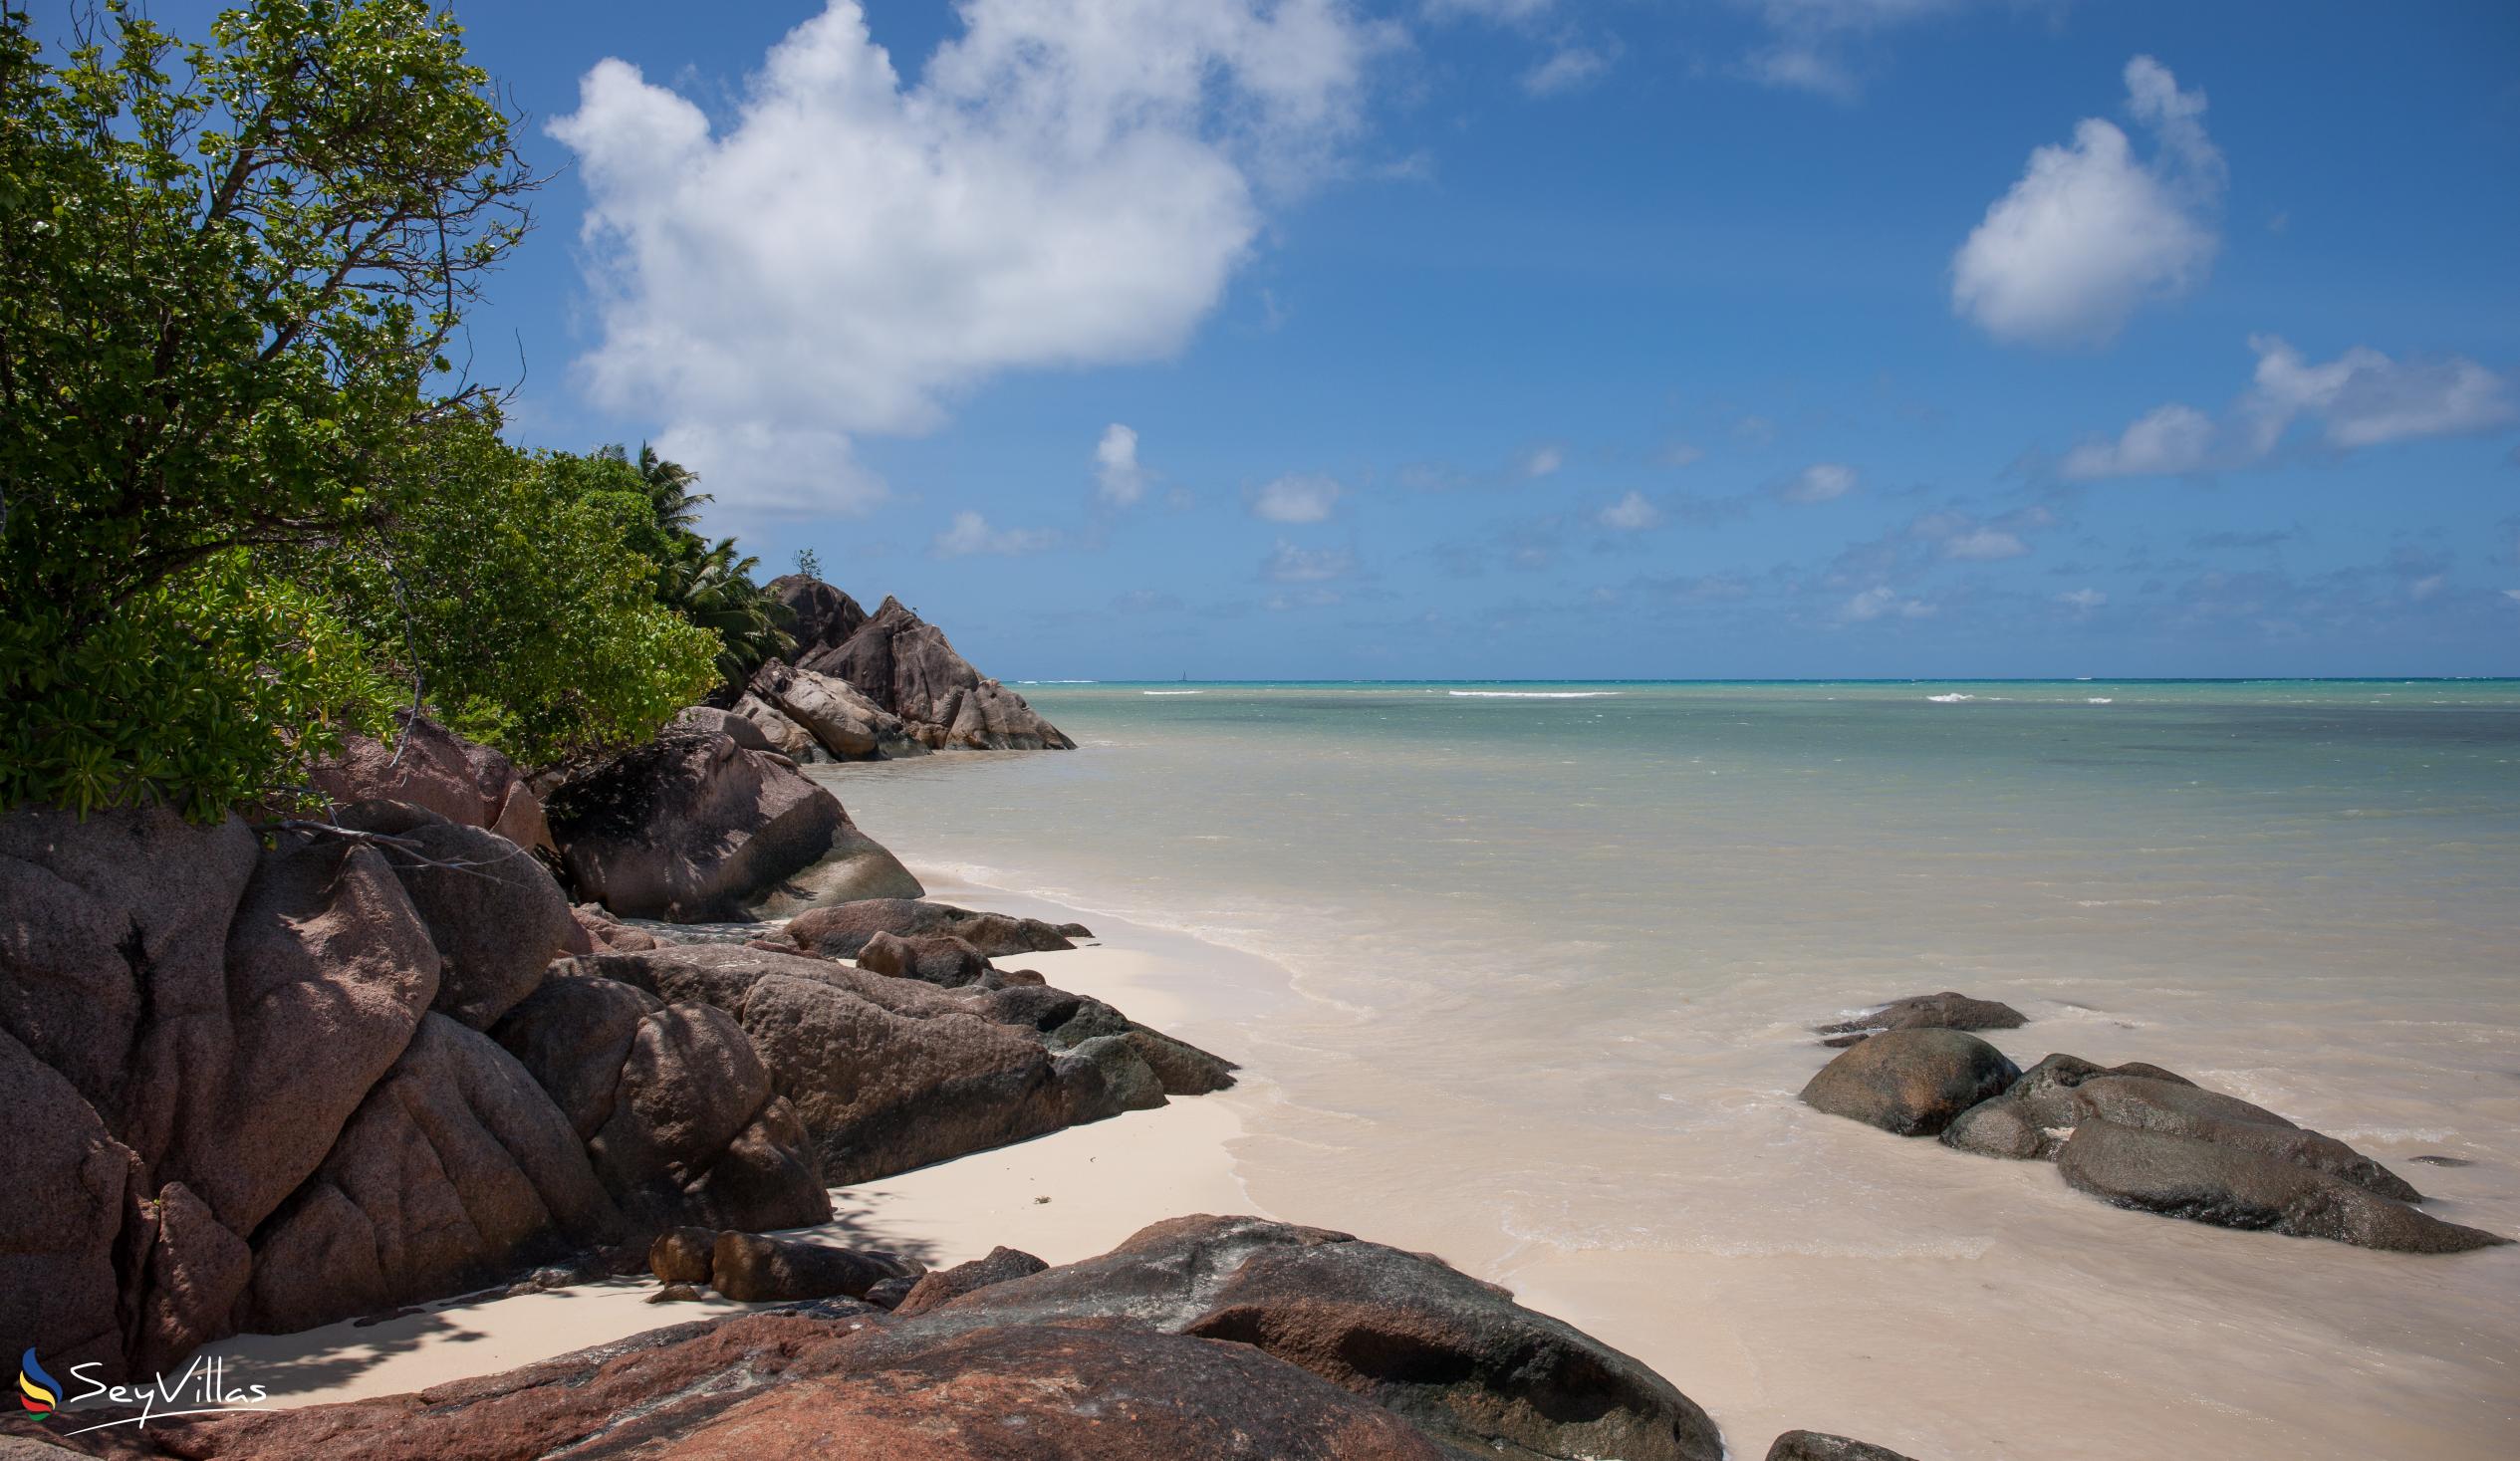 Photo 3: Anse Citron - Praslin (Seychelles)